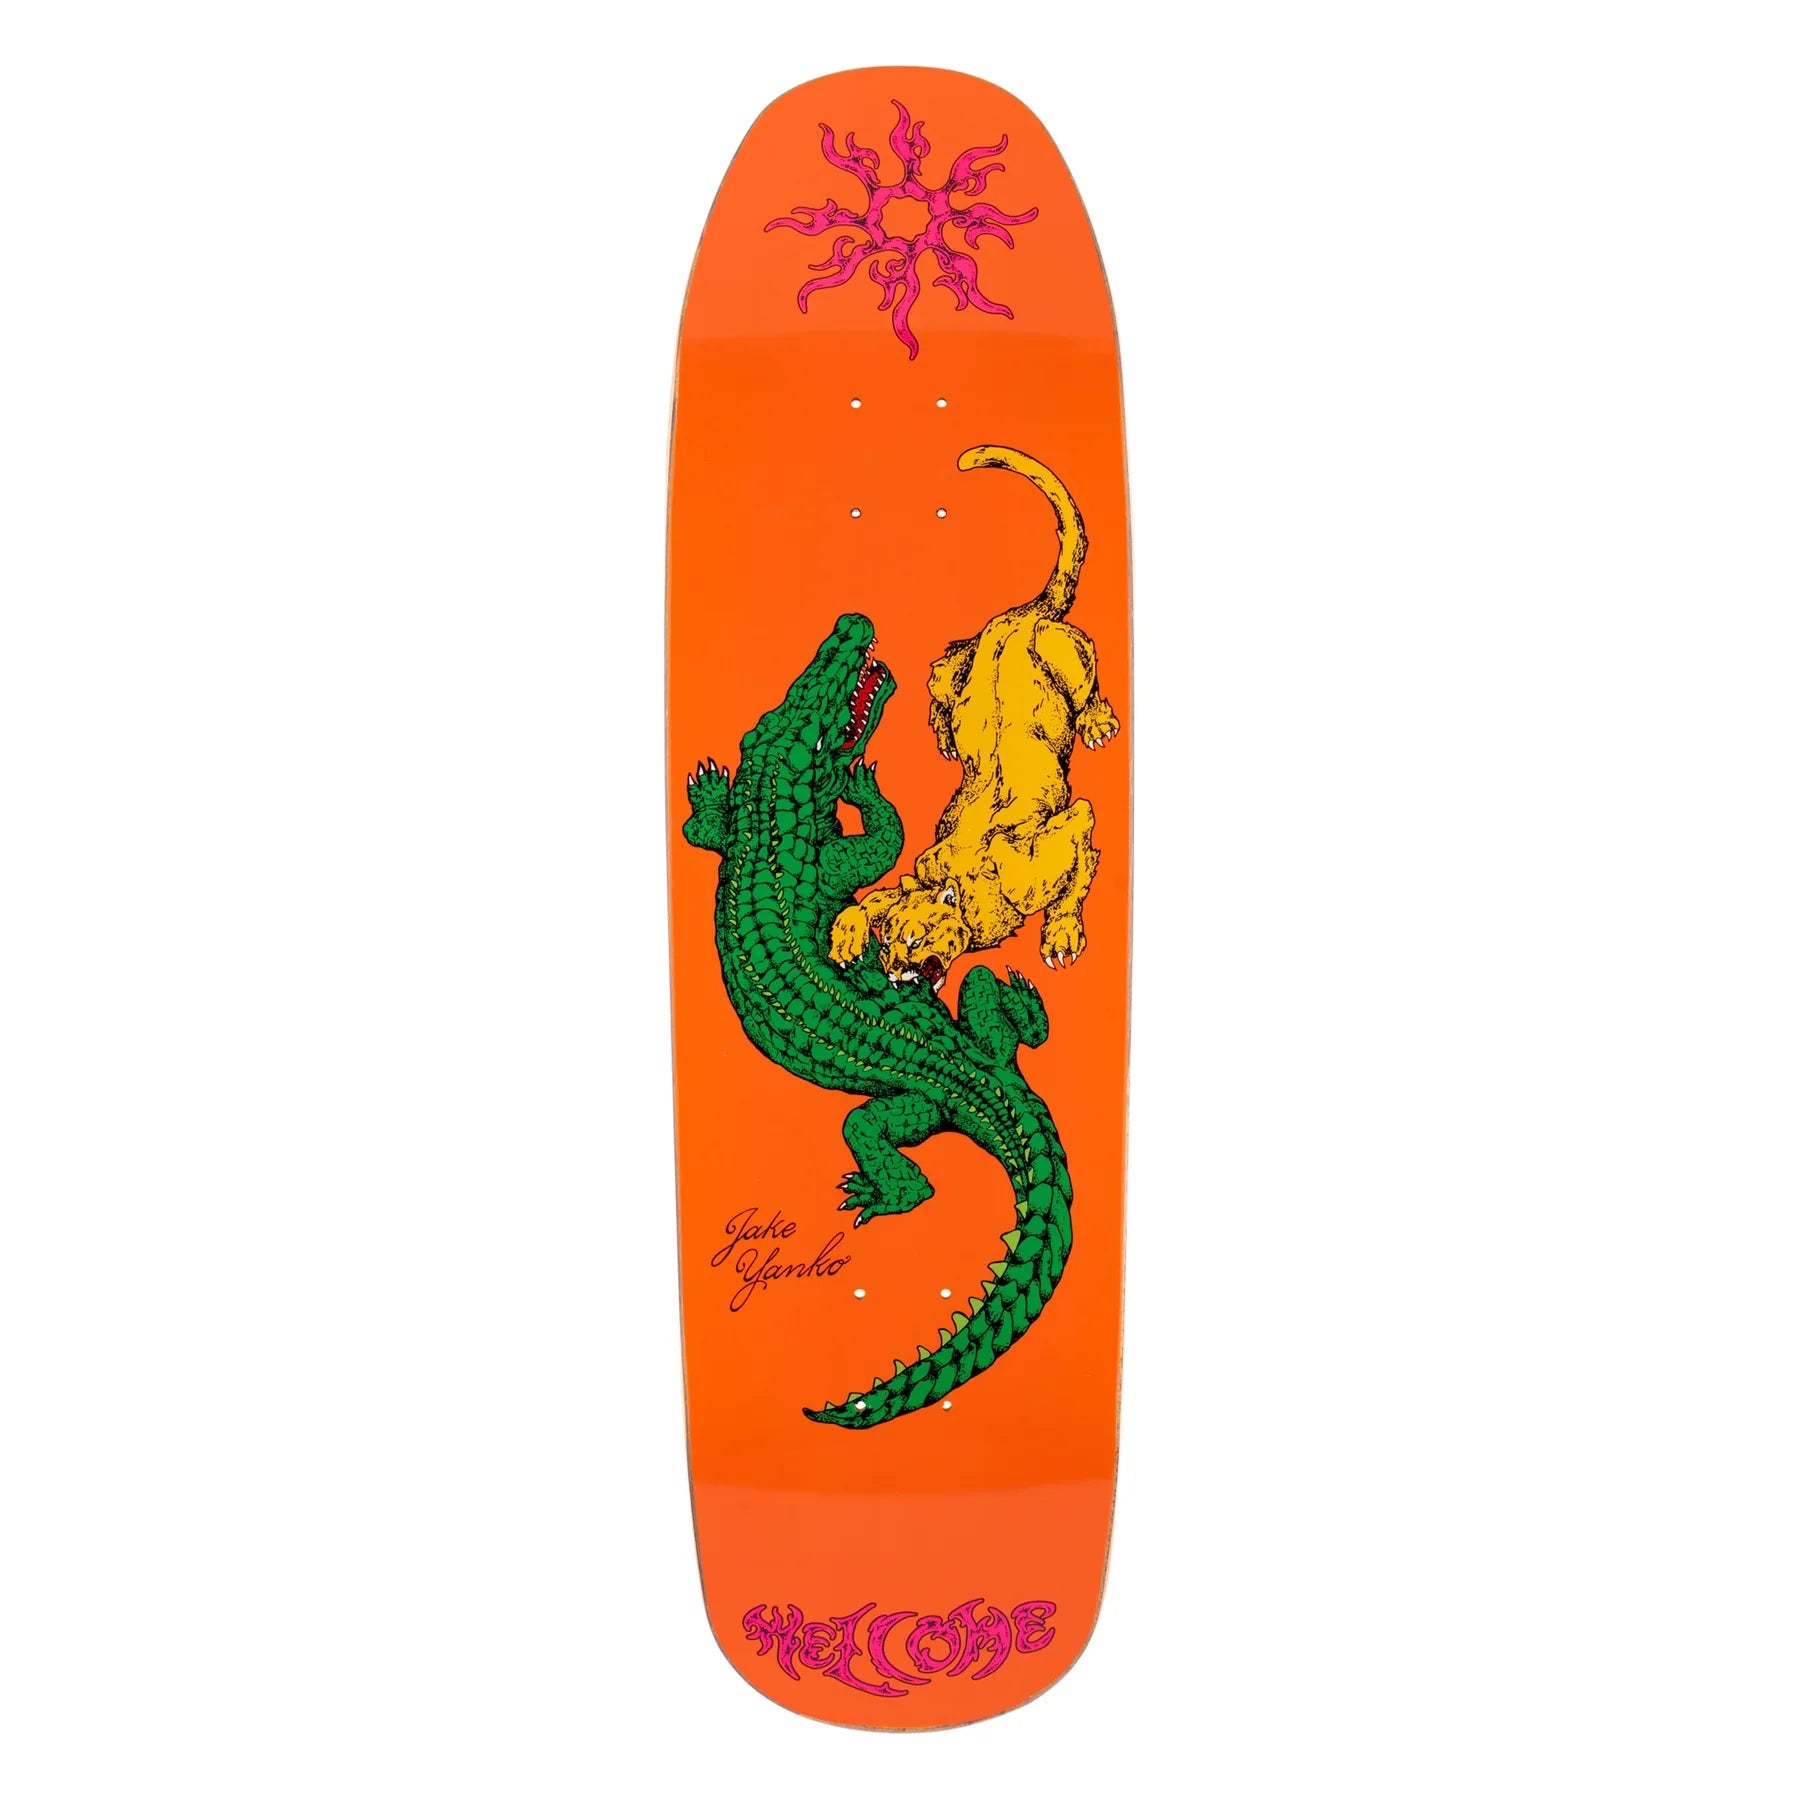 WELCOME Jake Yanko Swamp Fight On Panther 9.0 Skateboard Deck Skateboard Decks Welcome 